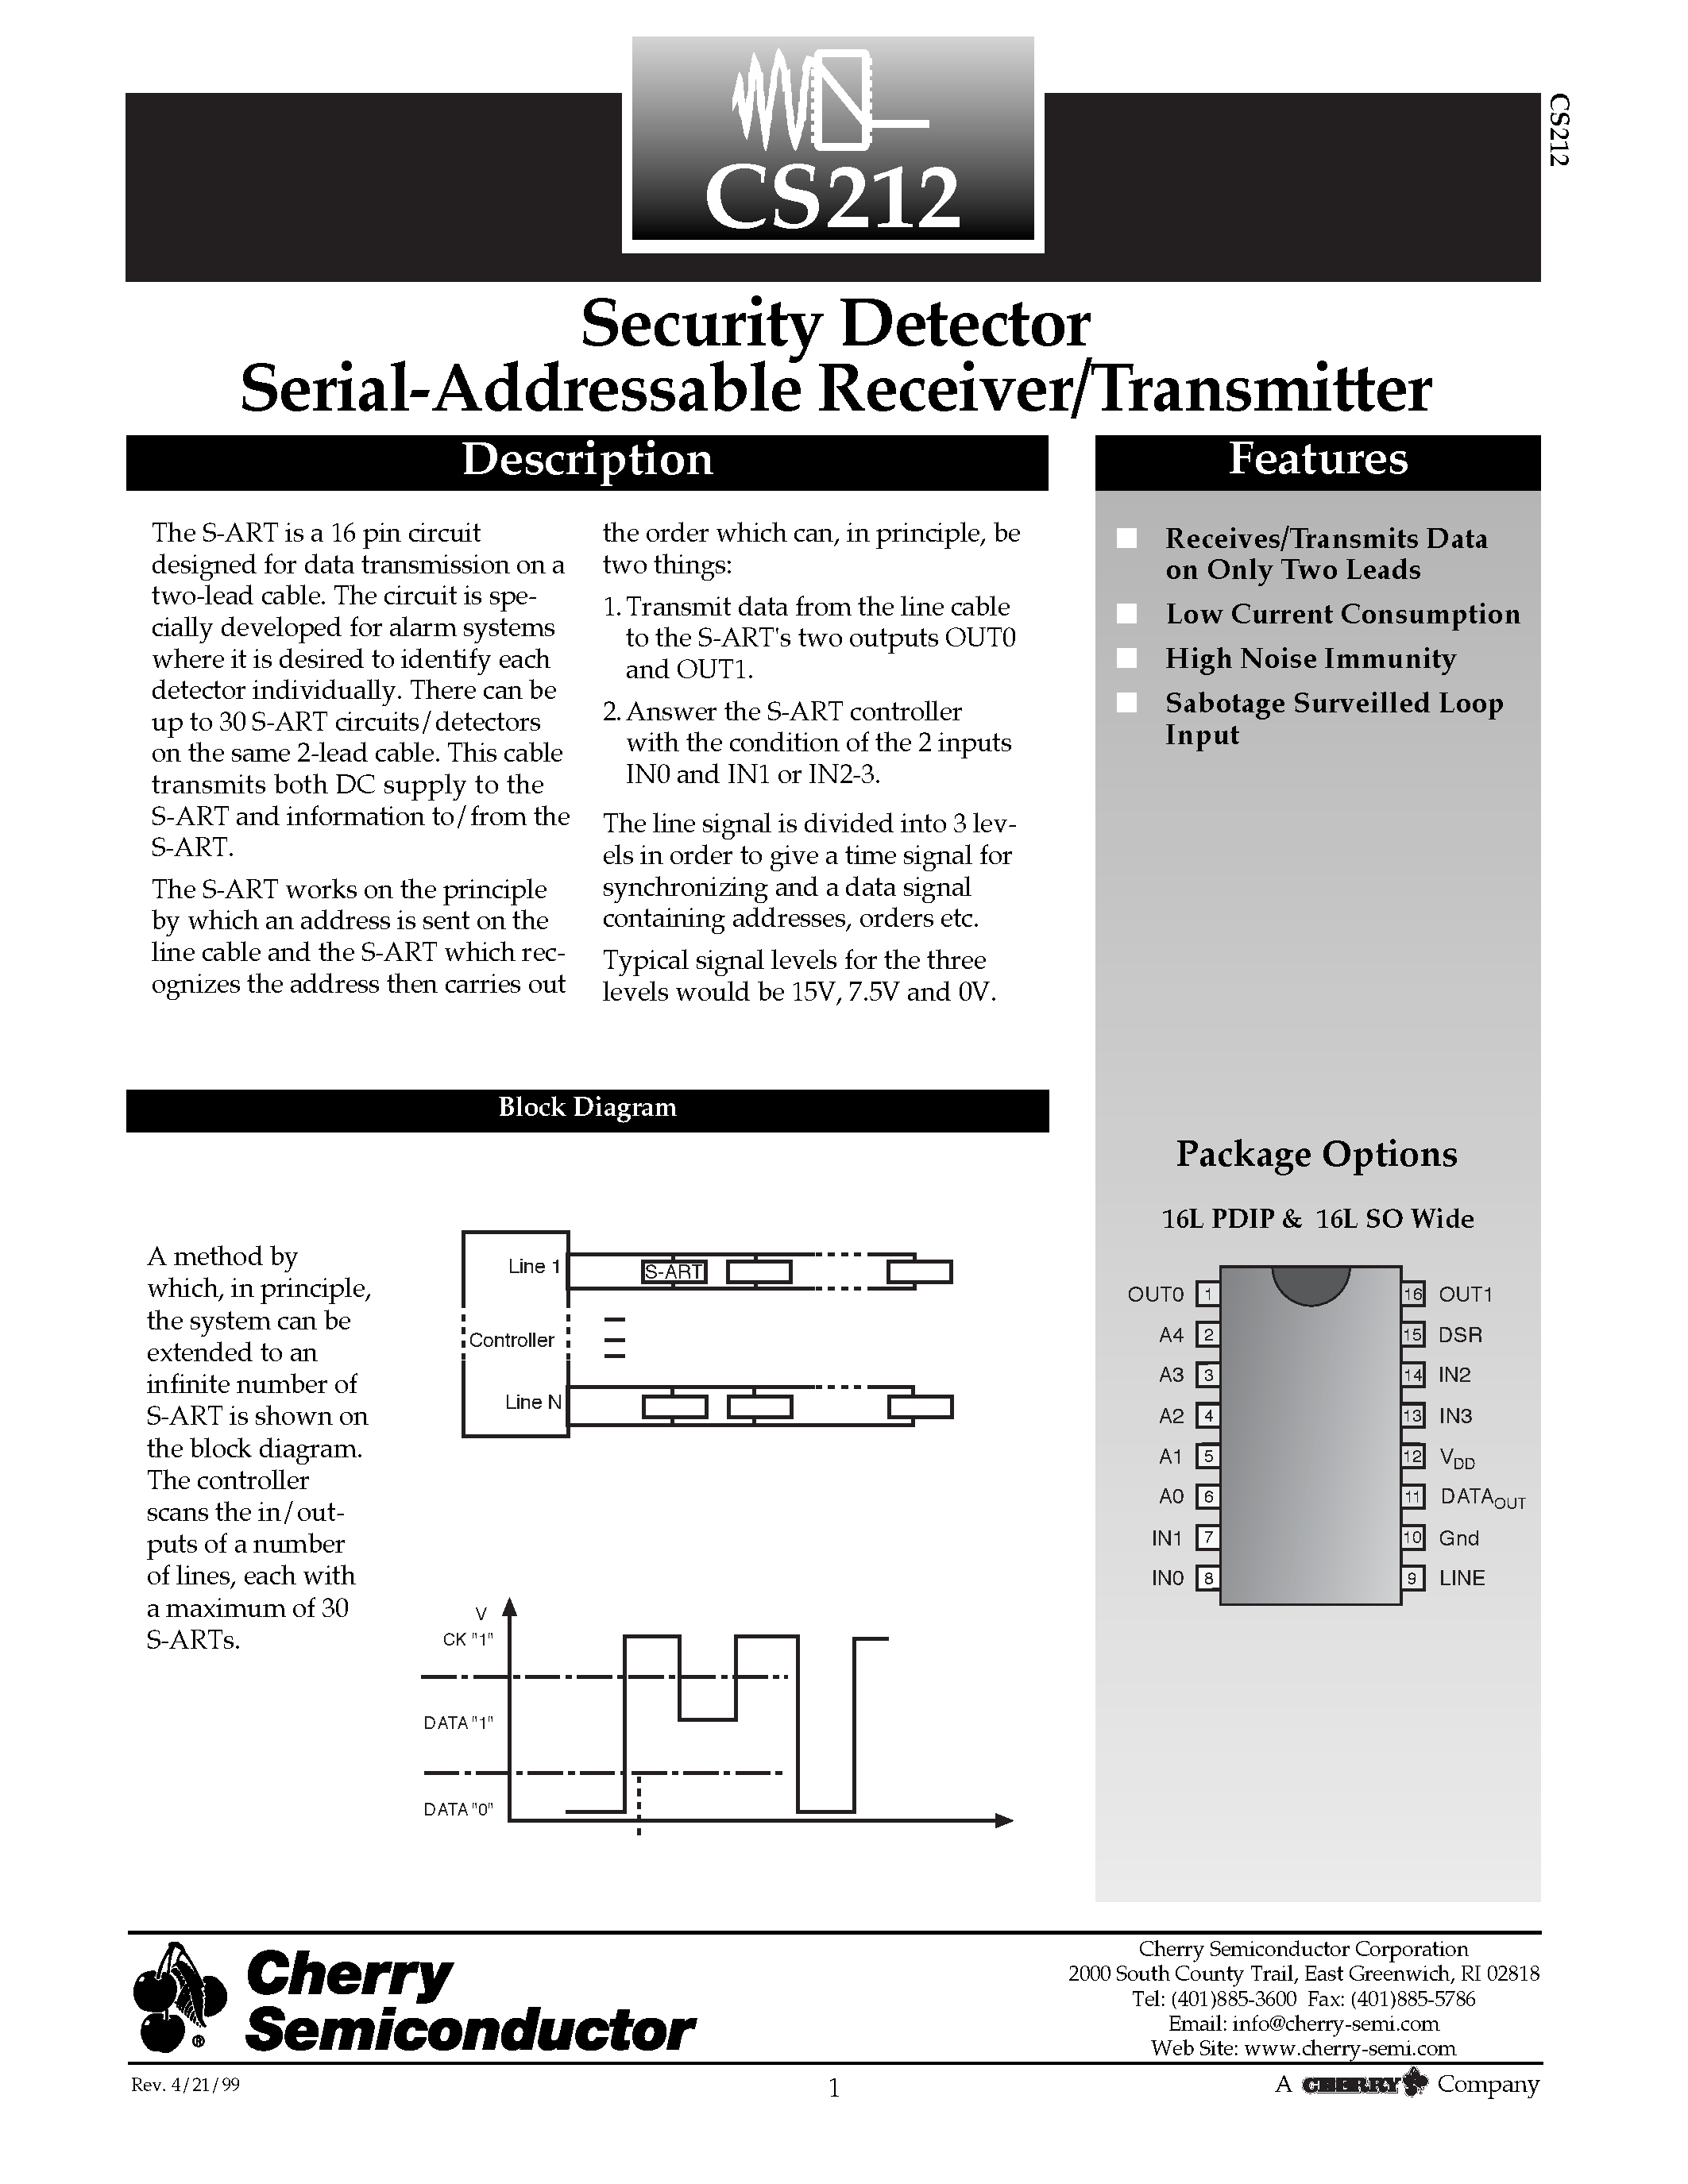 Datasheet CS212EDW16 - Security Detector Serial-Addressable Receiver/Transmitter page 1